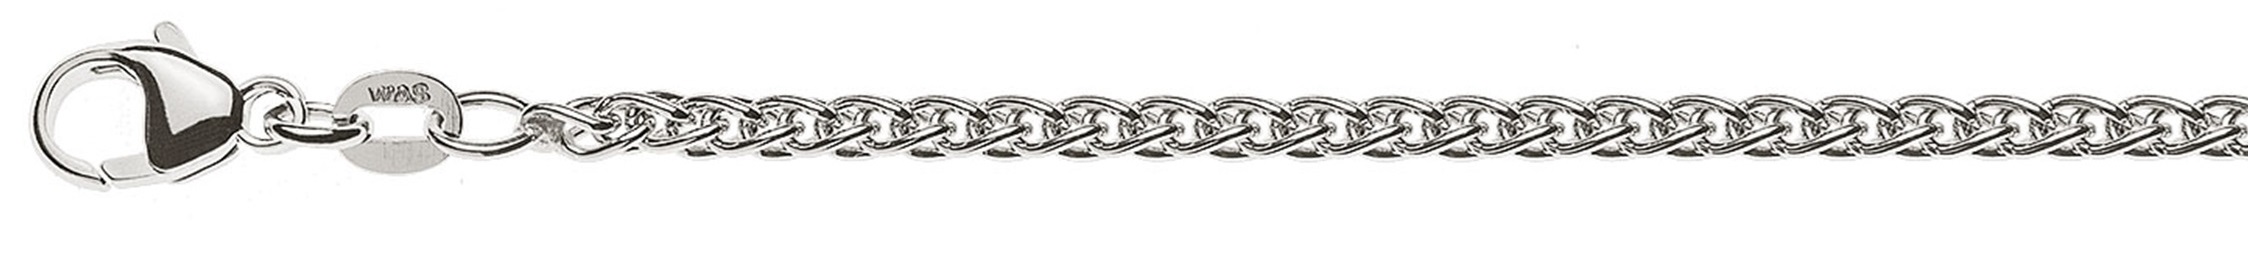 AURONOS Prestige Collier or blanc 18K chaîne câble 50cm 2.5mm